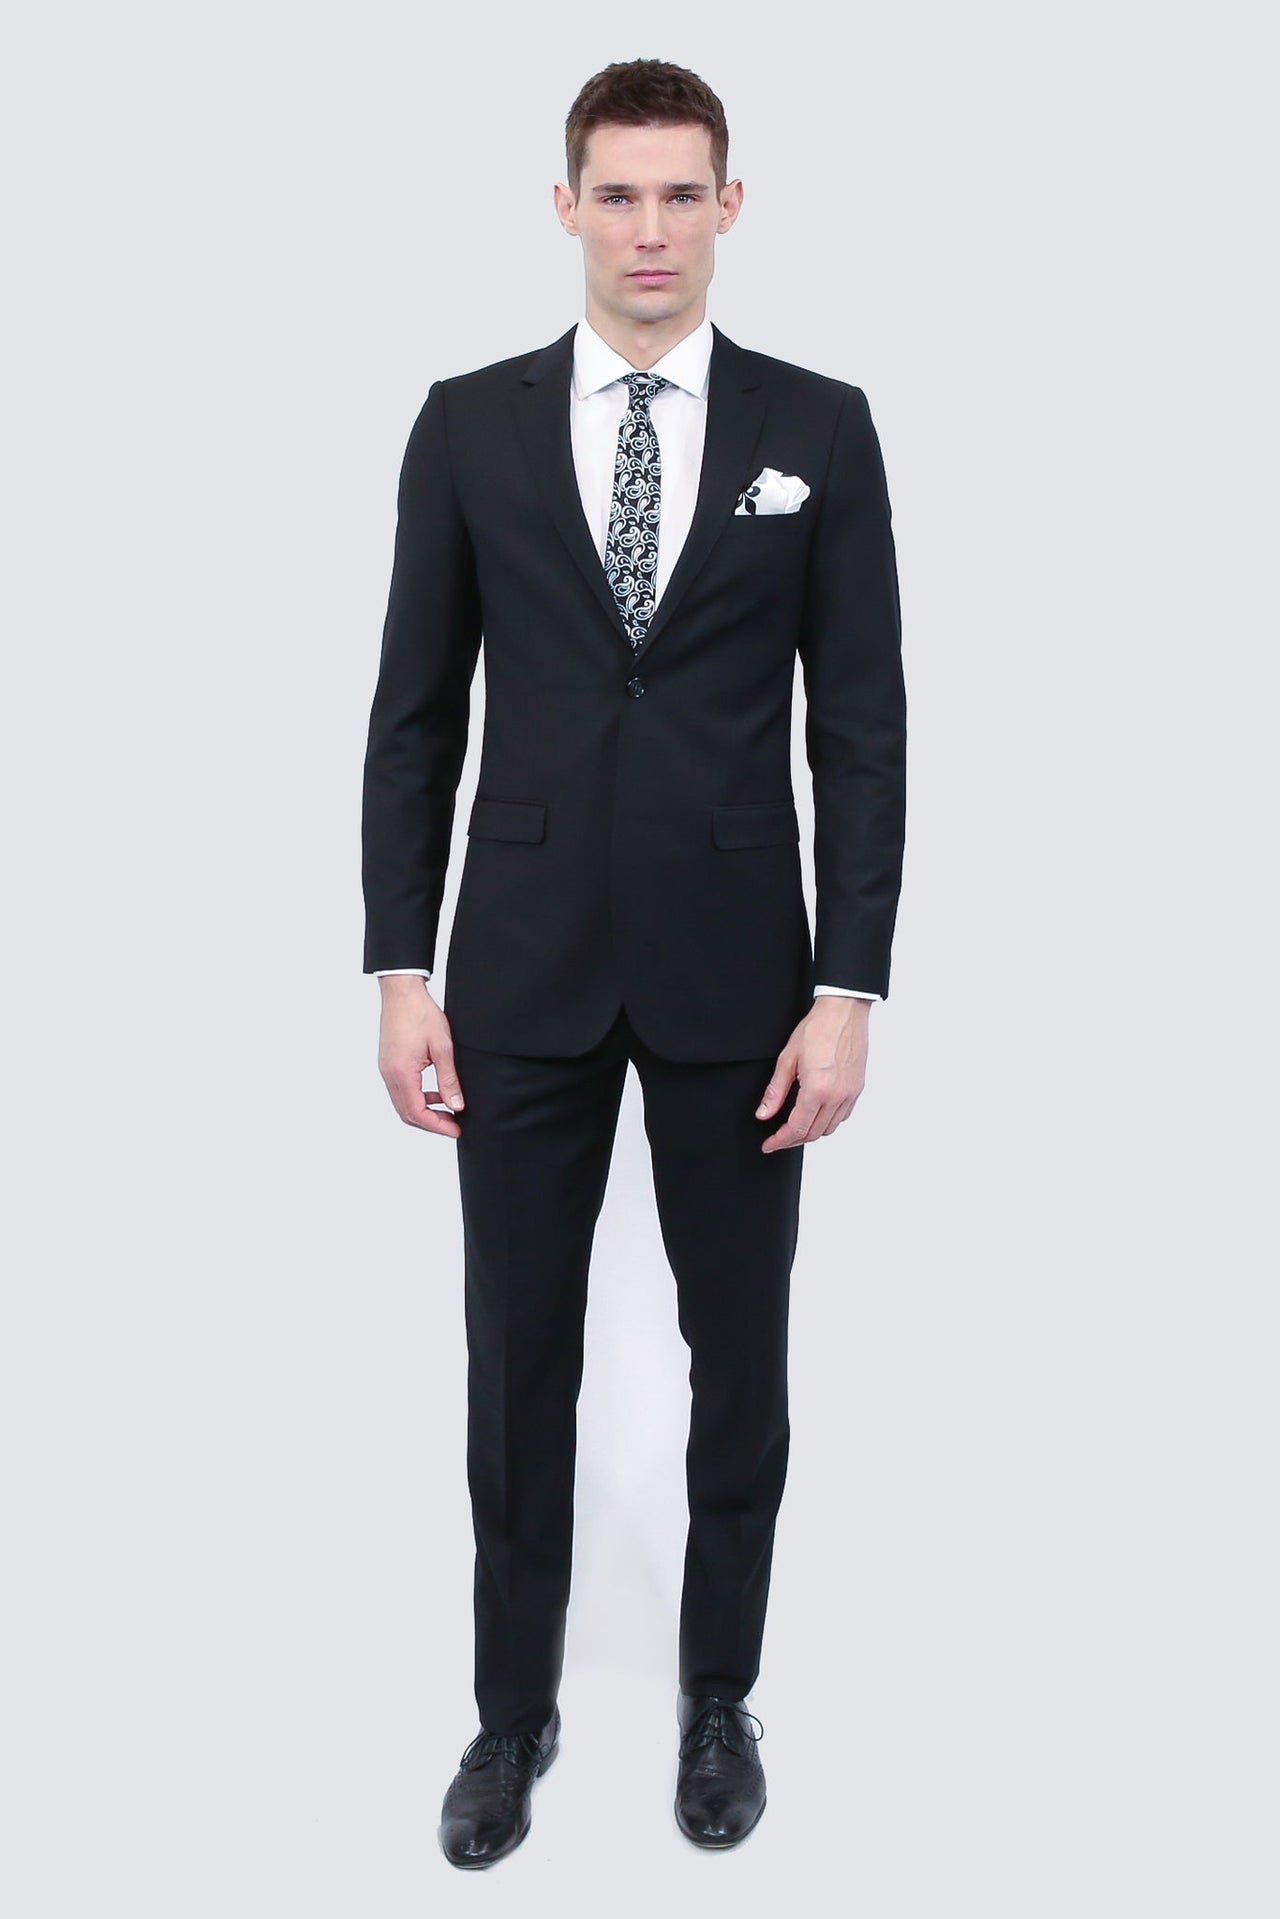 Tailor's Stretch Blend Suit | Classic Black Modern or Slim Fit - Tomasso Black